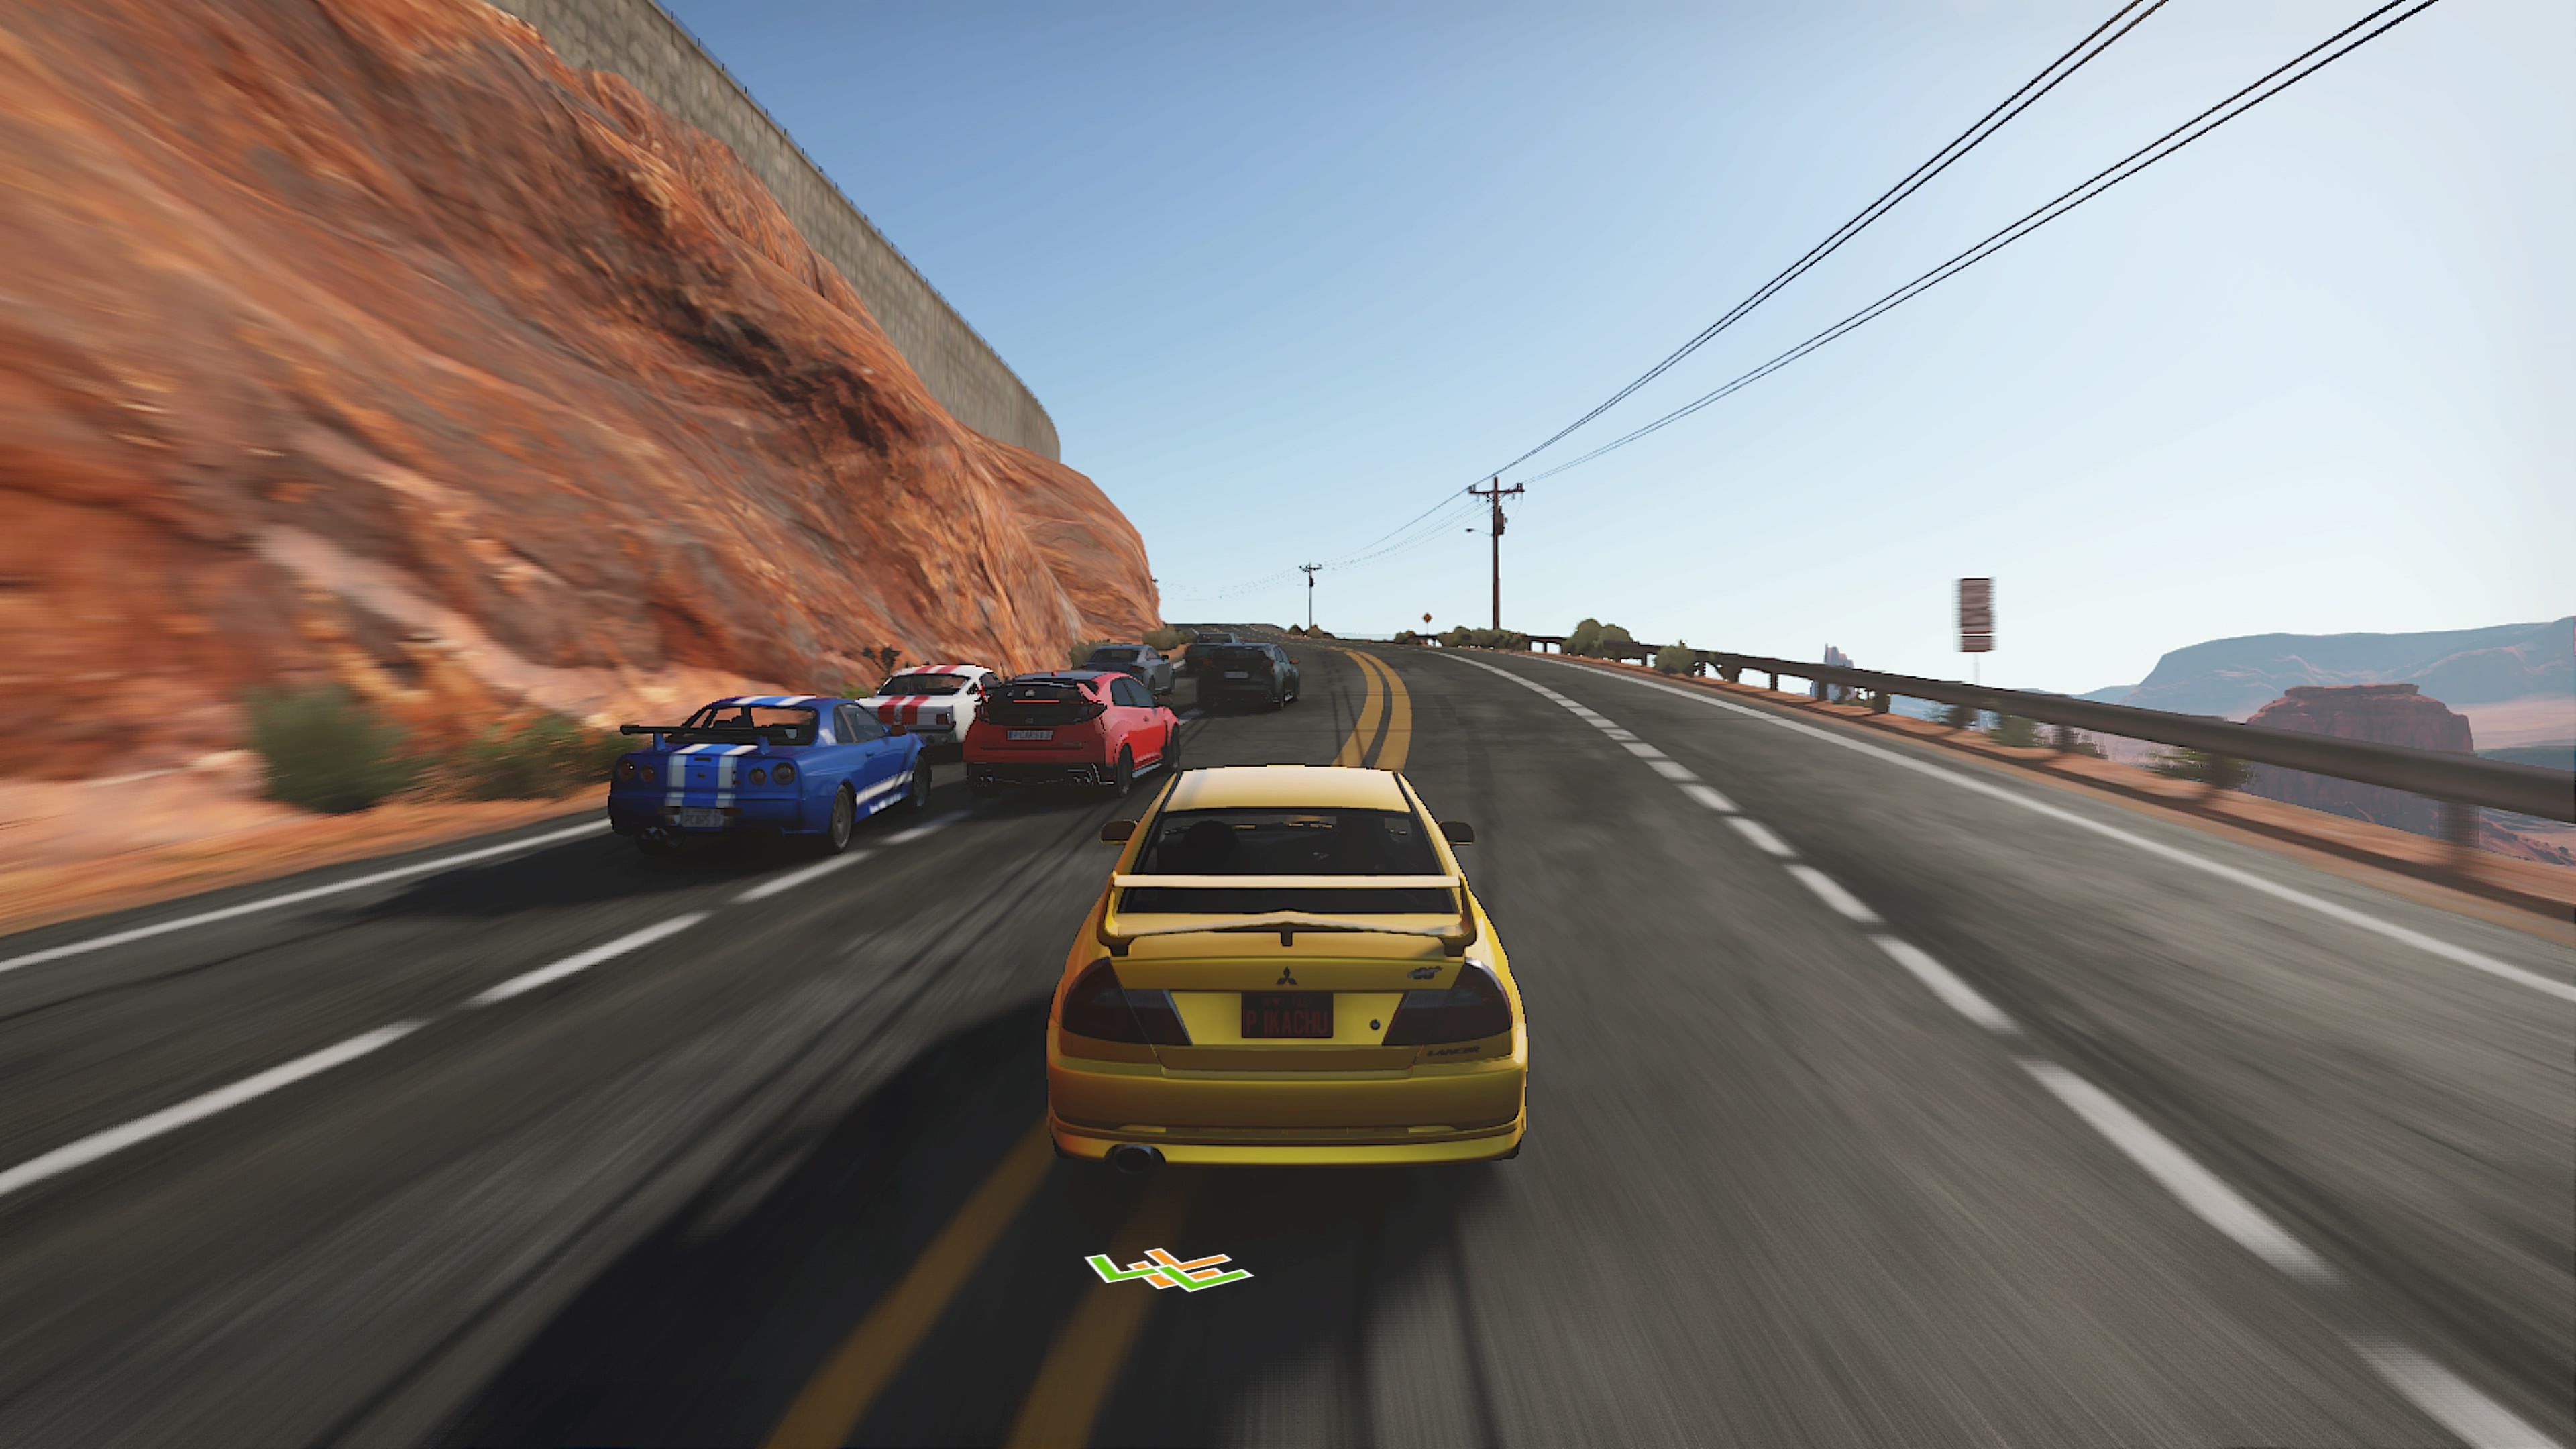 Cars Review - GameSpot